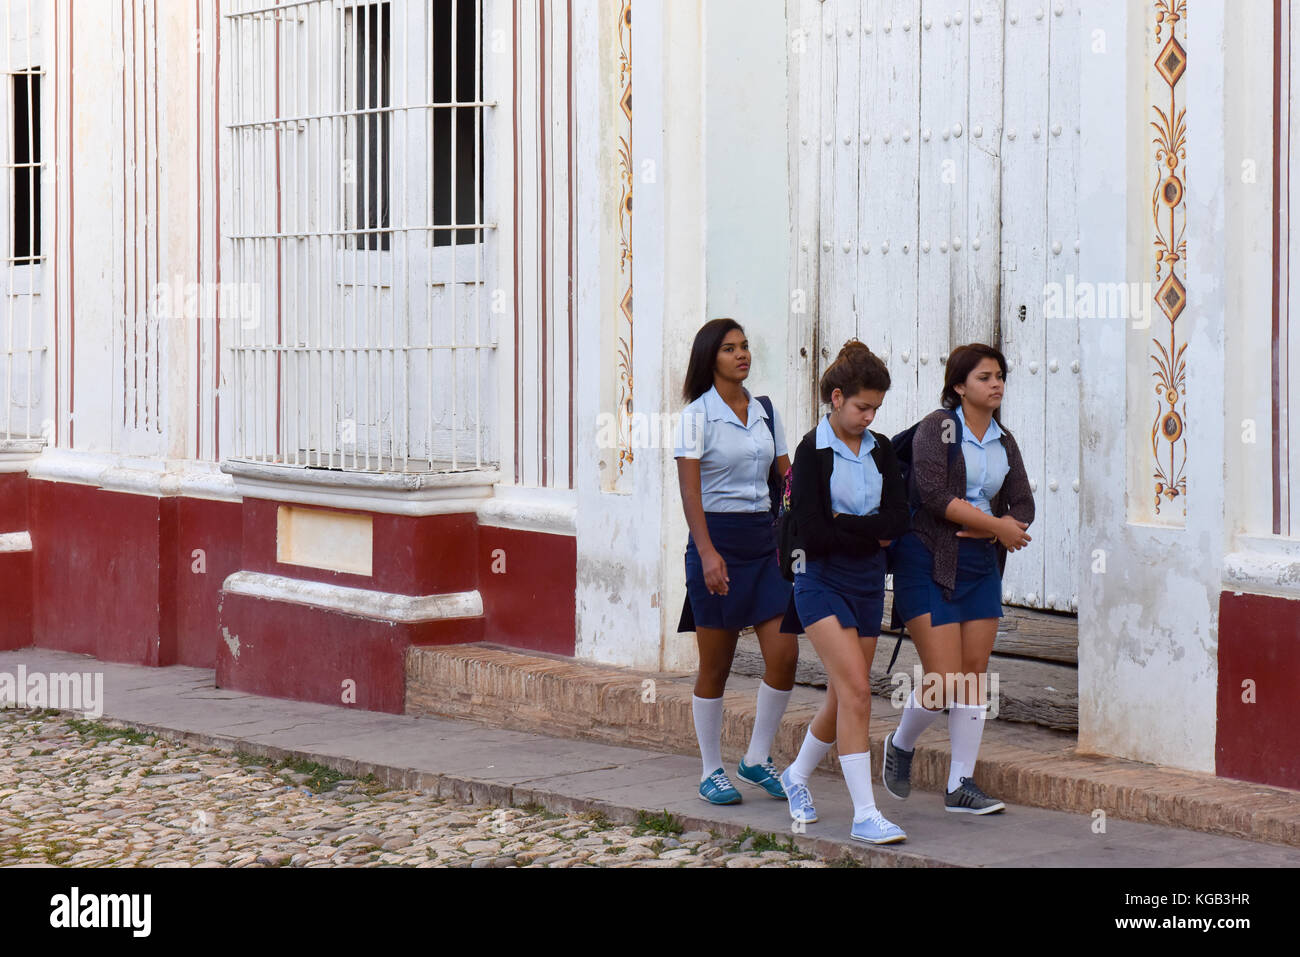 Schoolgirls, Trinidad Cuba Stock Photo